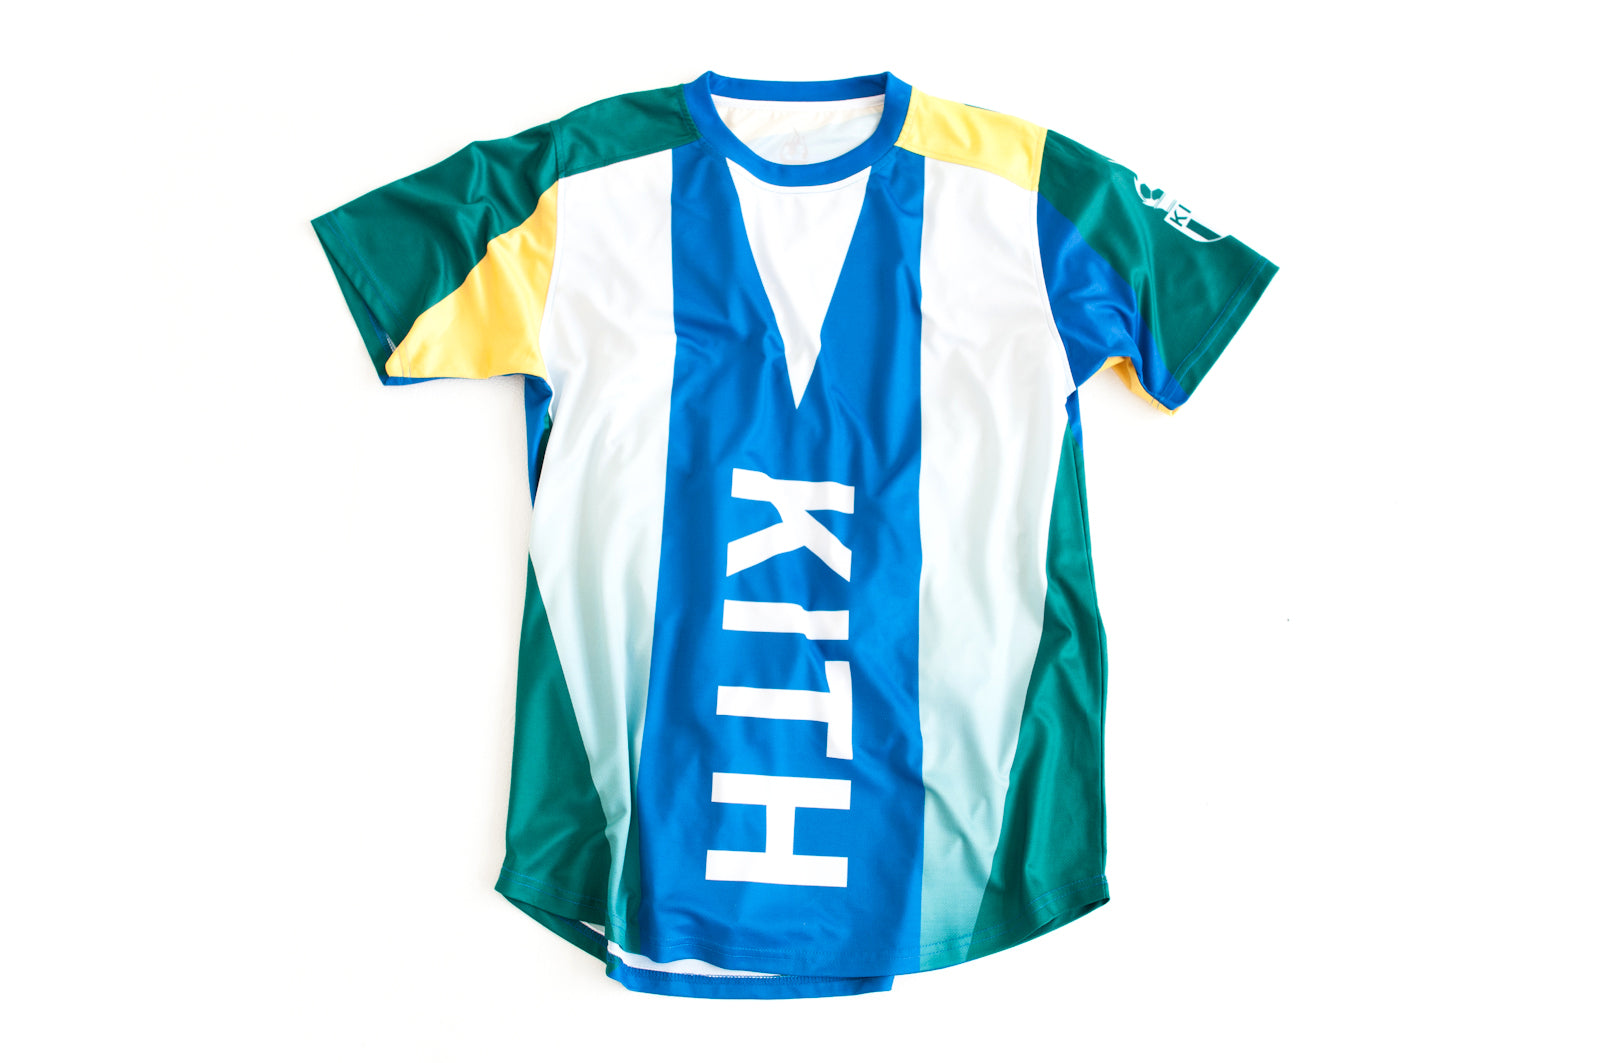 kith jersey